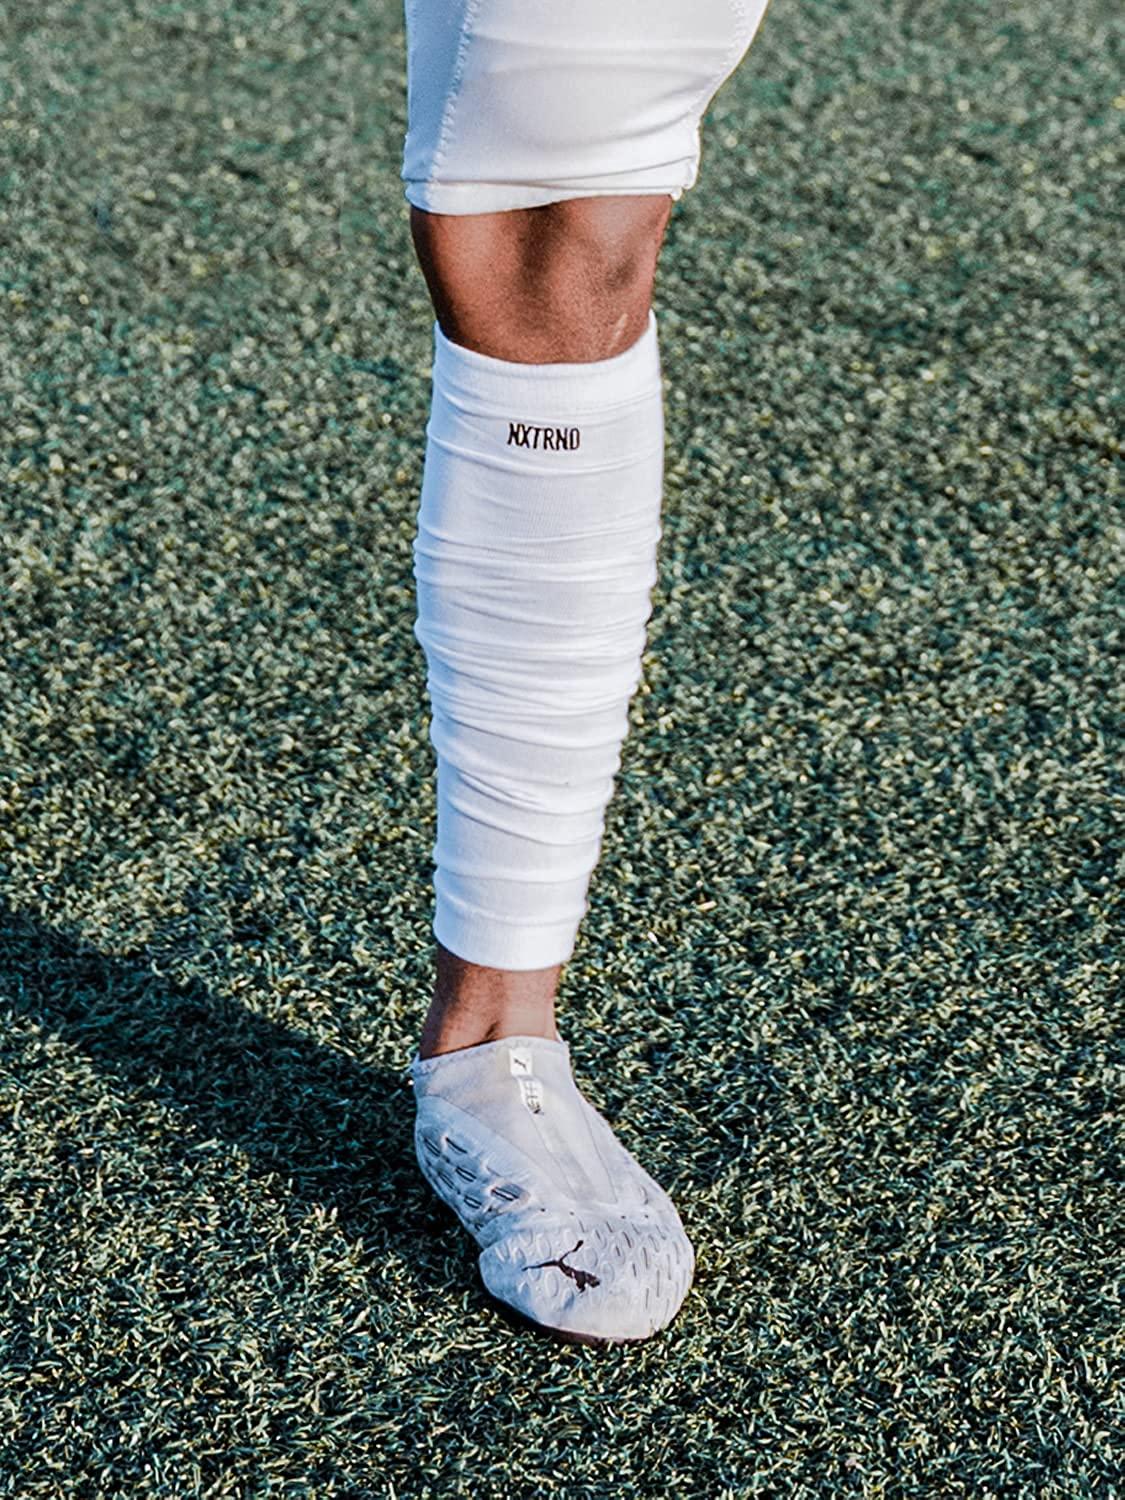 NXTRND Football Leg Sleeves White, Photo Sleeves 